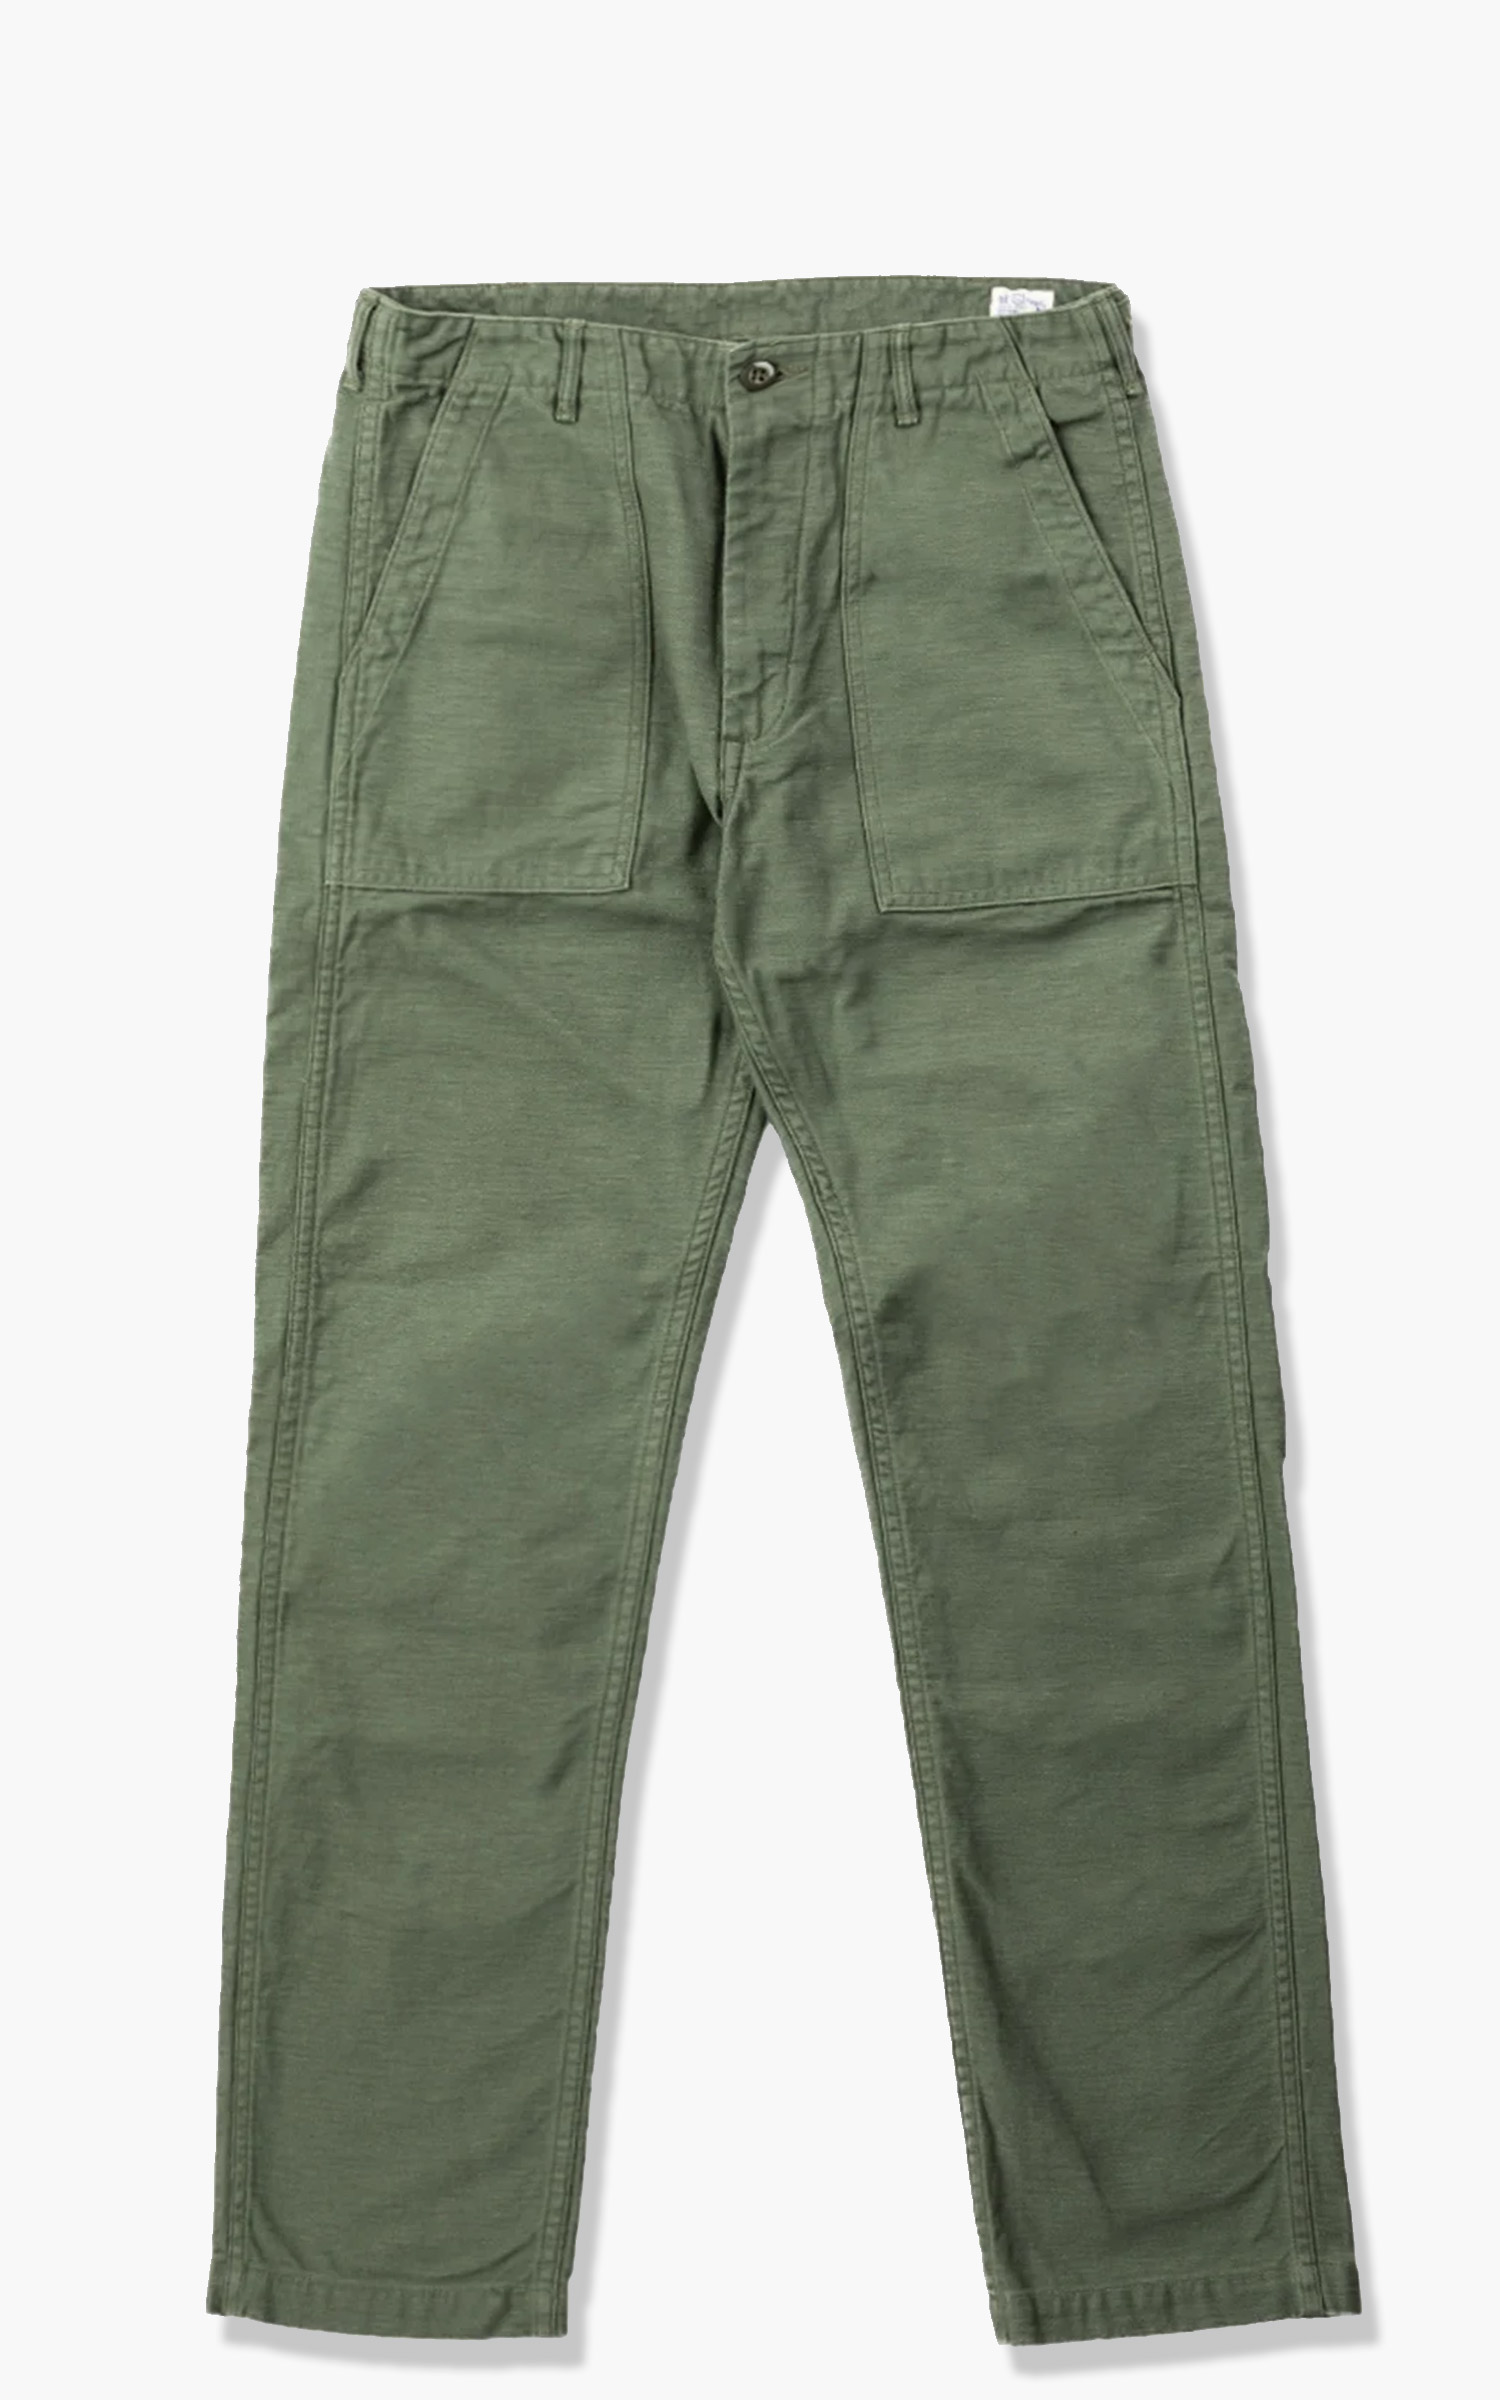 OrSlow US Army Fatigue Pants Slim Green